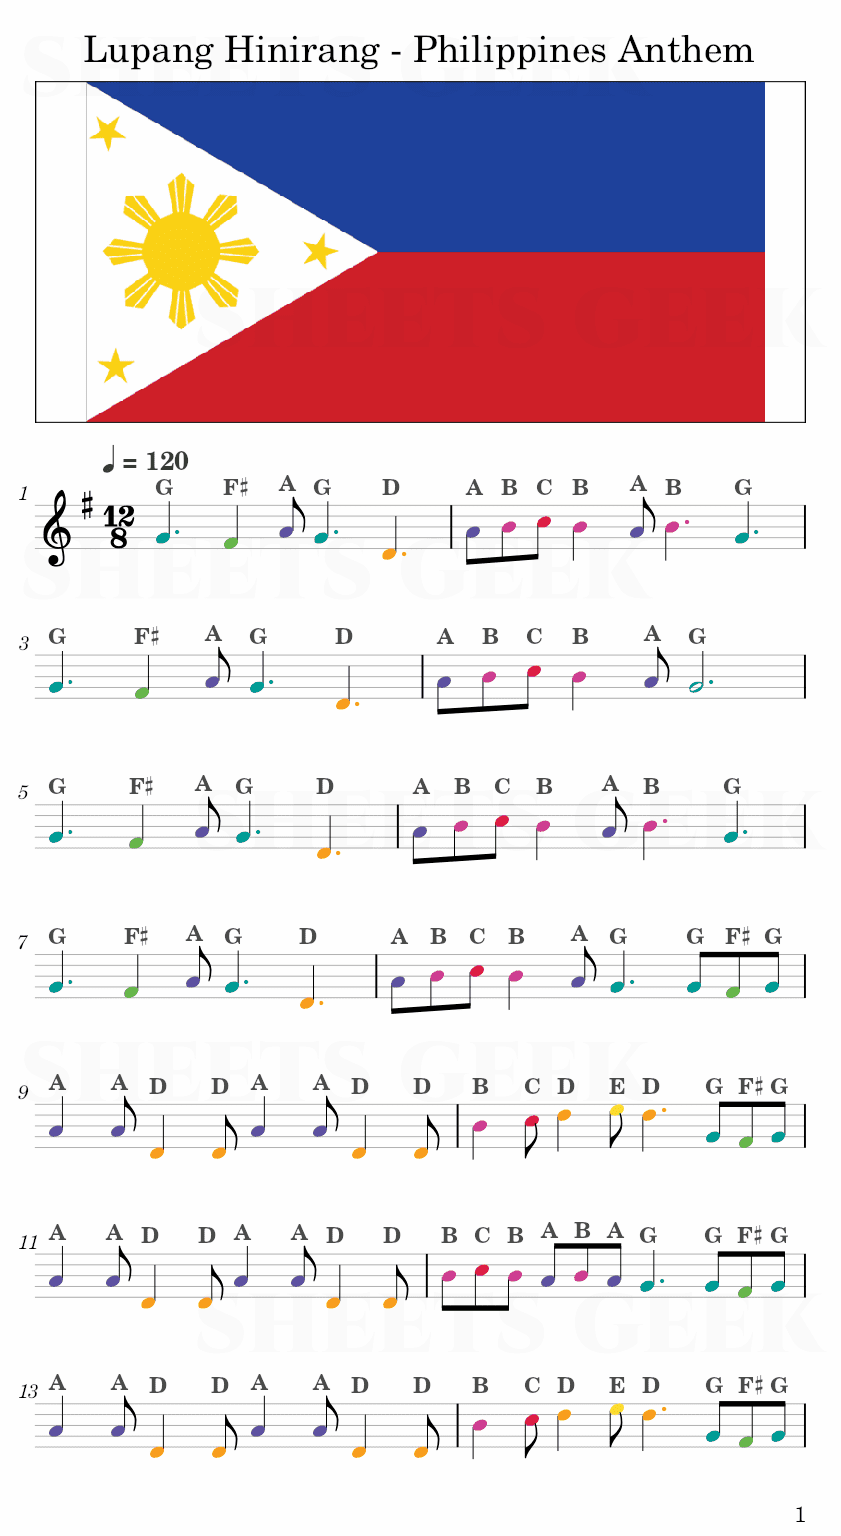 Lupang Hinirang - Philippines National Anthem Easy Sheet Music Free for piano, keyboard, flute, violin, sax, cello page 1